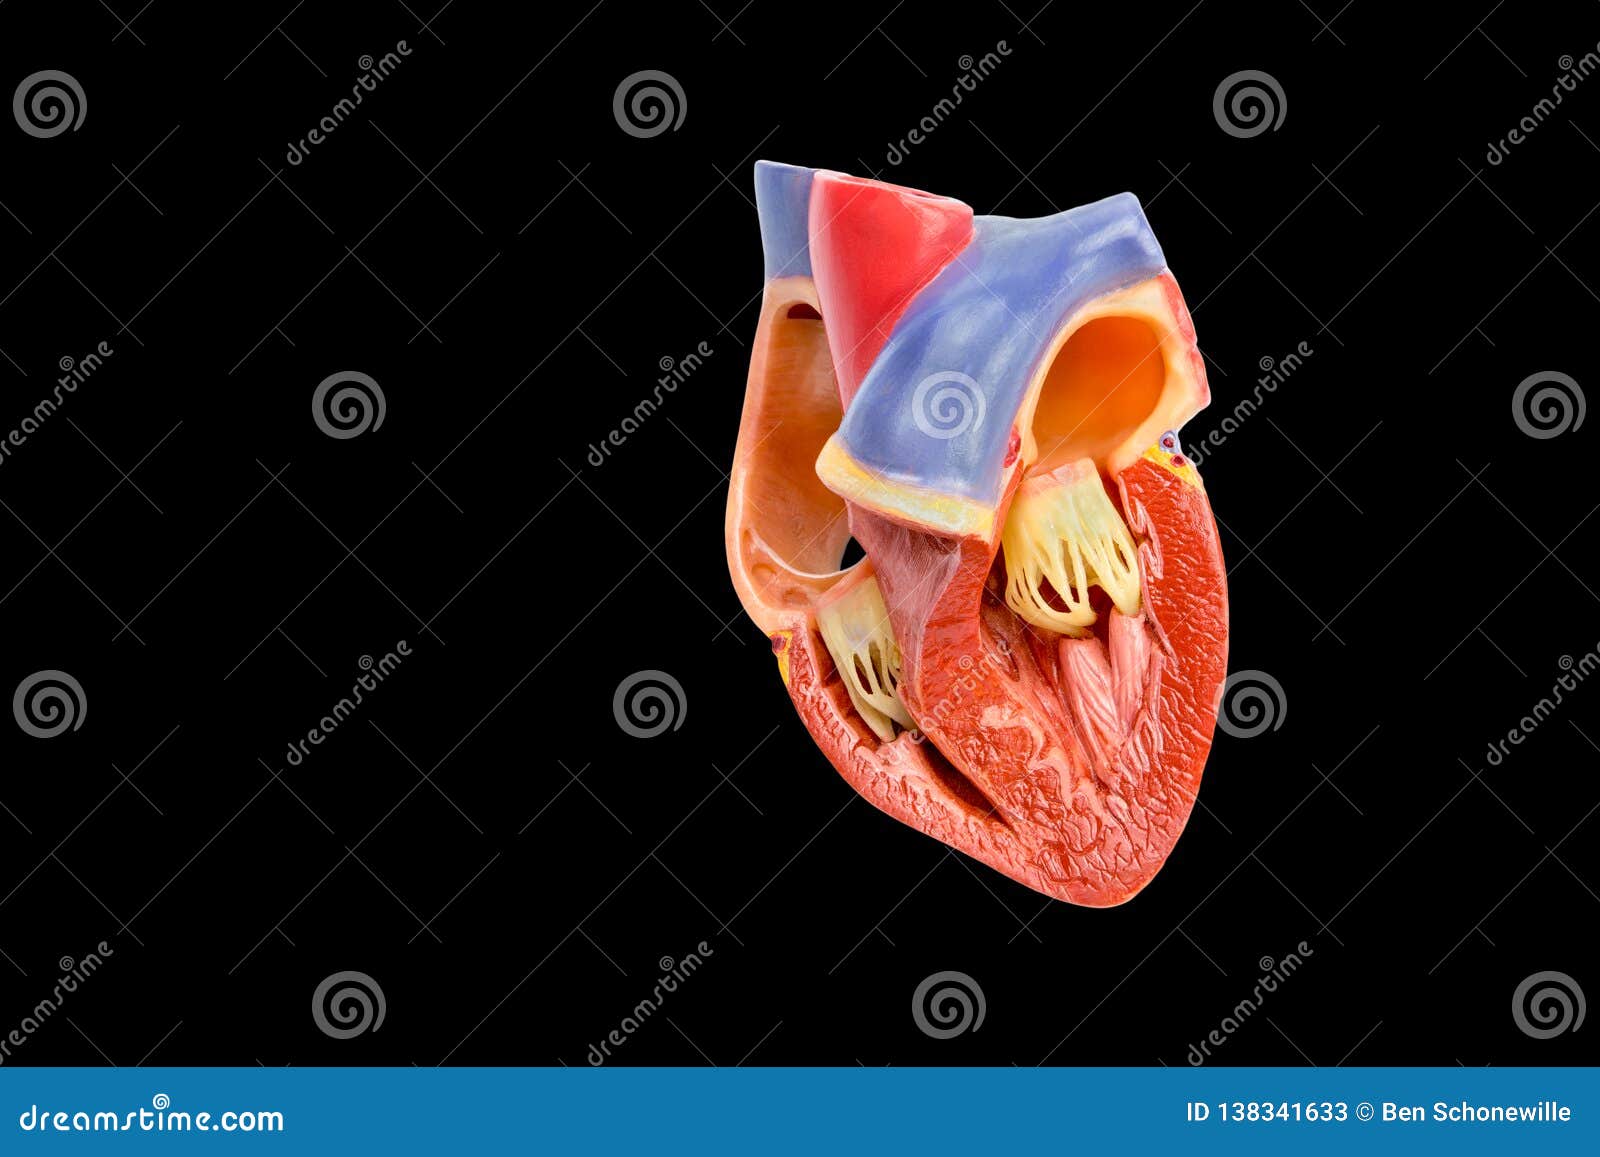 Inside The Human Heart - Human Anatomy